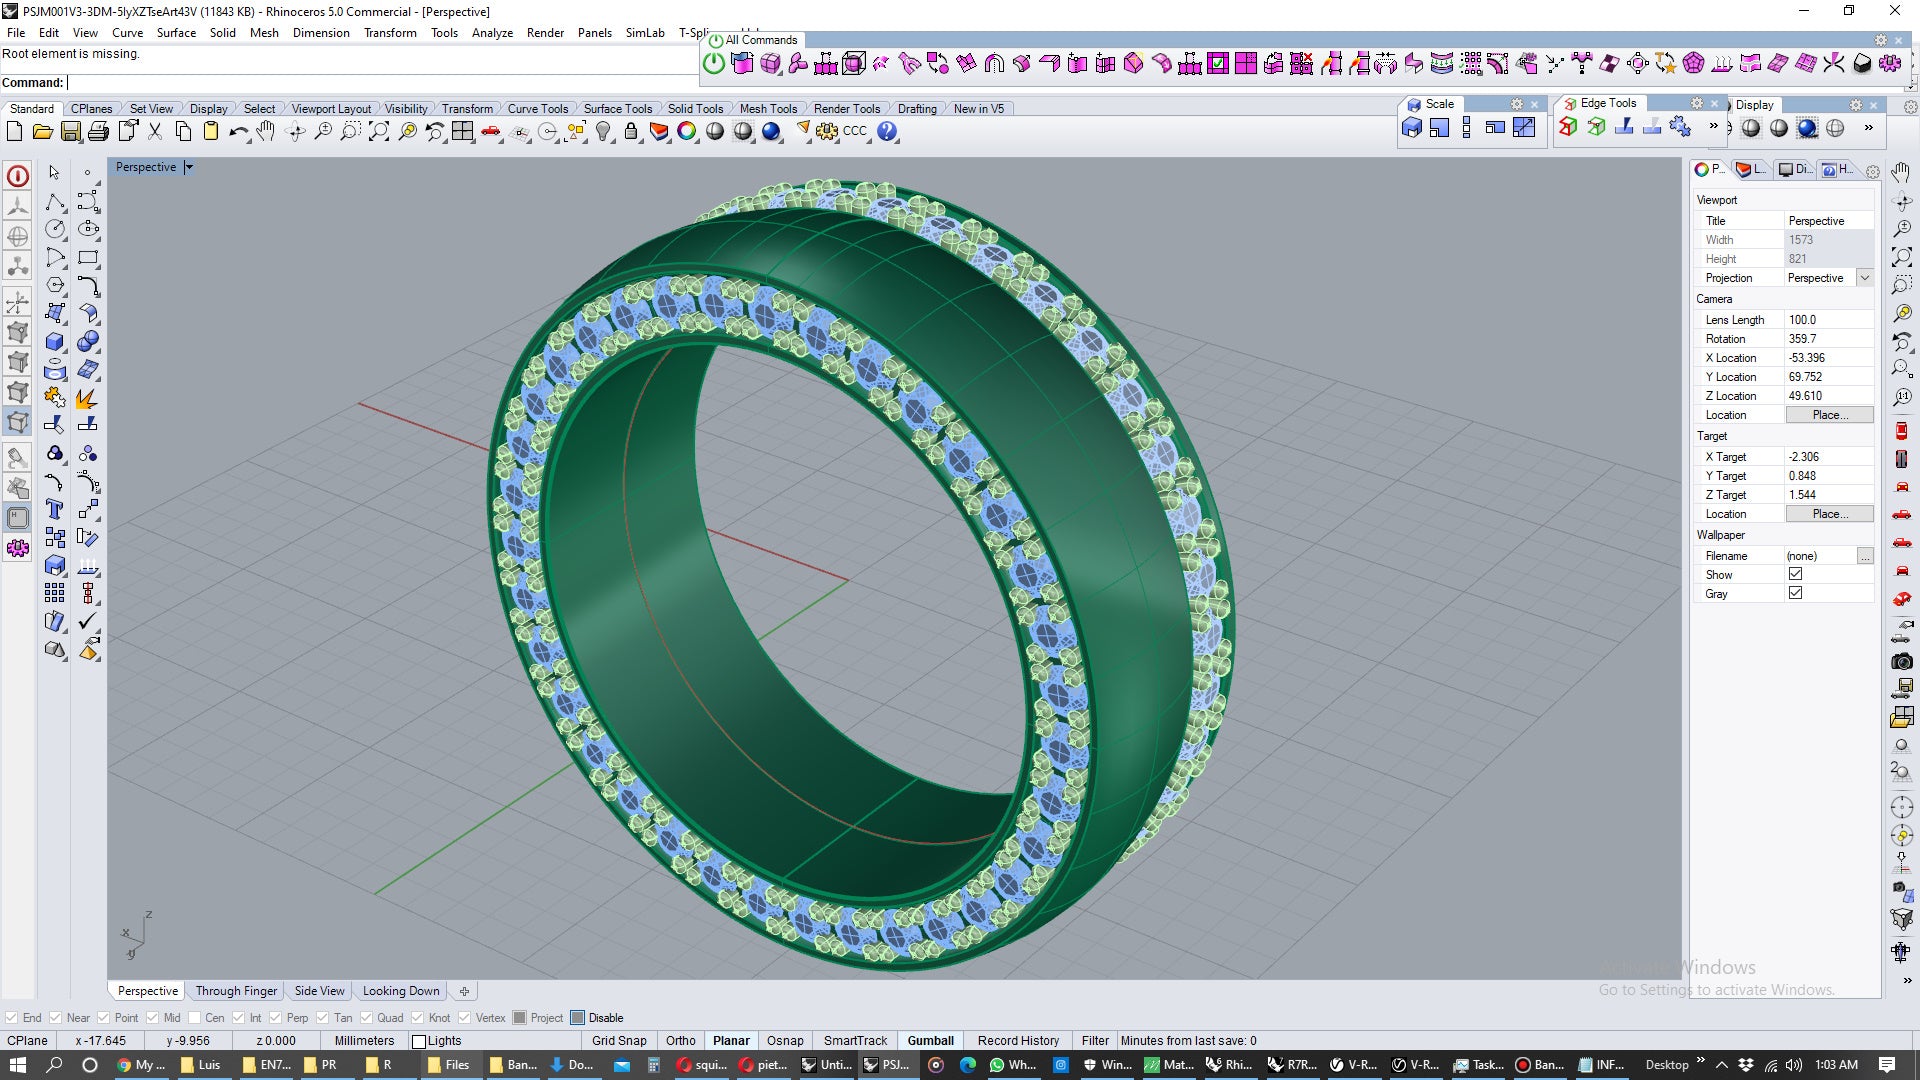 Wedding Ring Set Women Men Ring 3D CAD Design-PSJM001V3